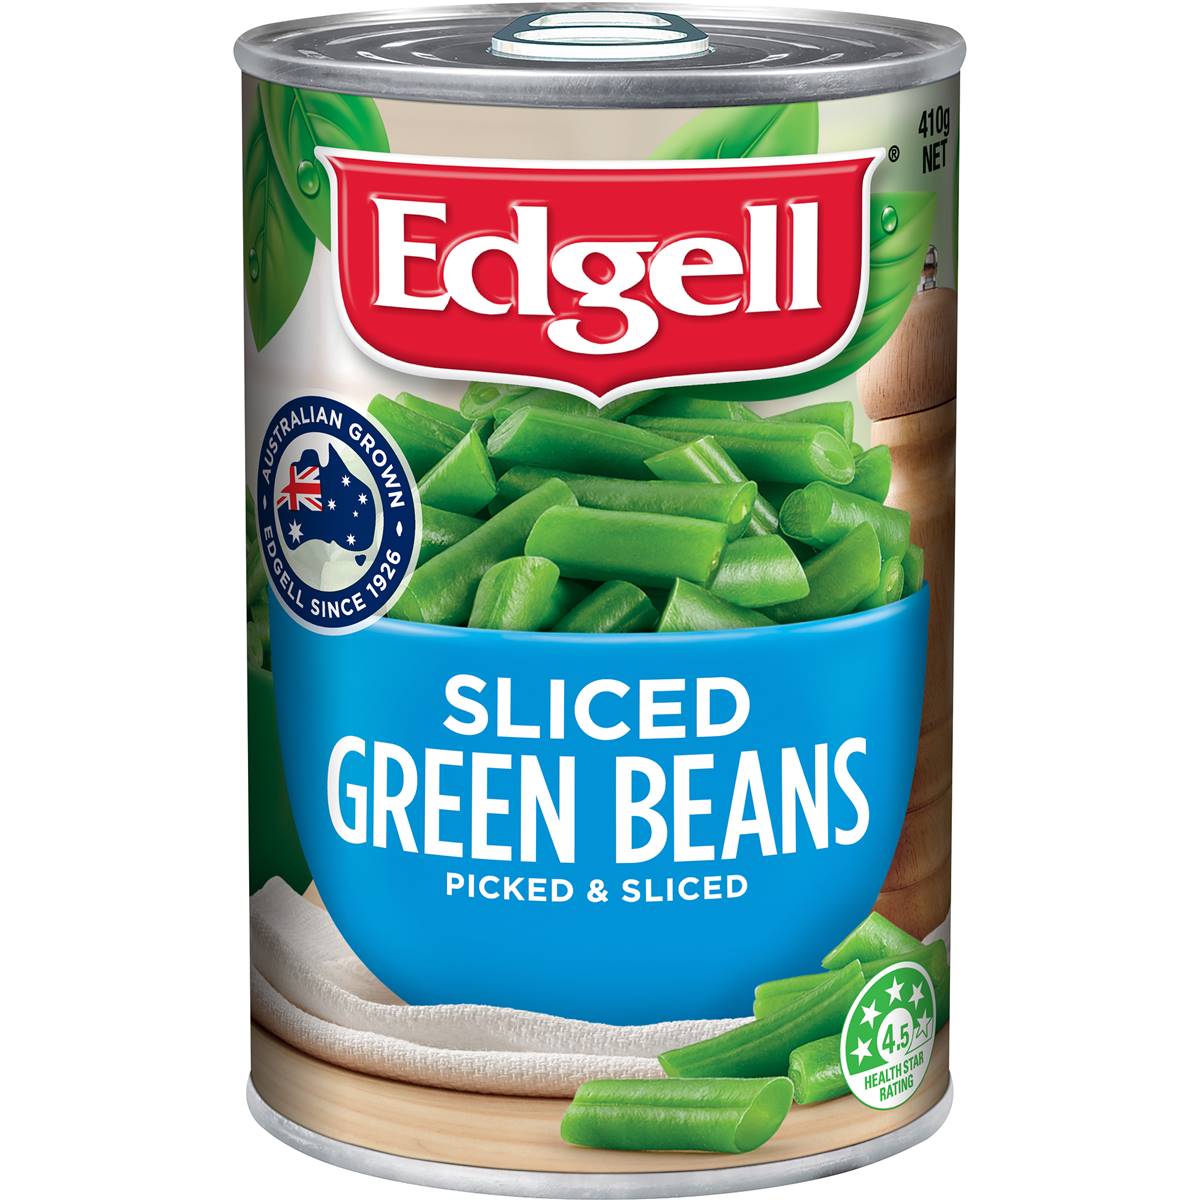 Calories in Edgell Sliced Green Beans Green Sliced